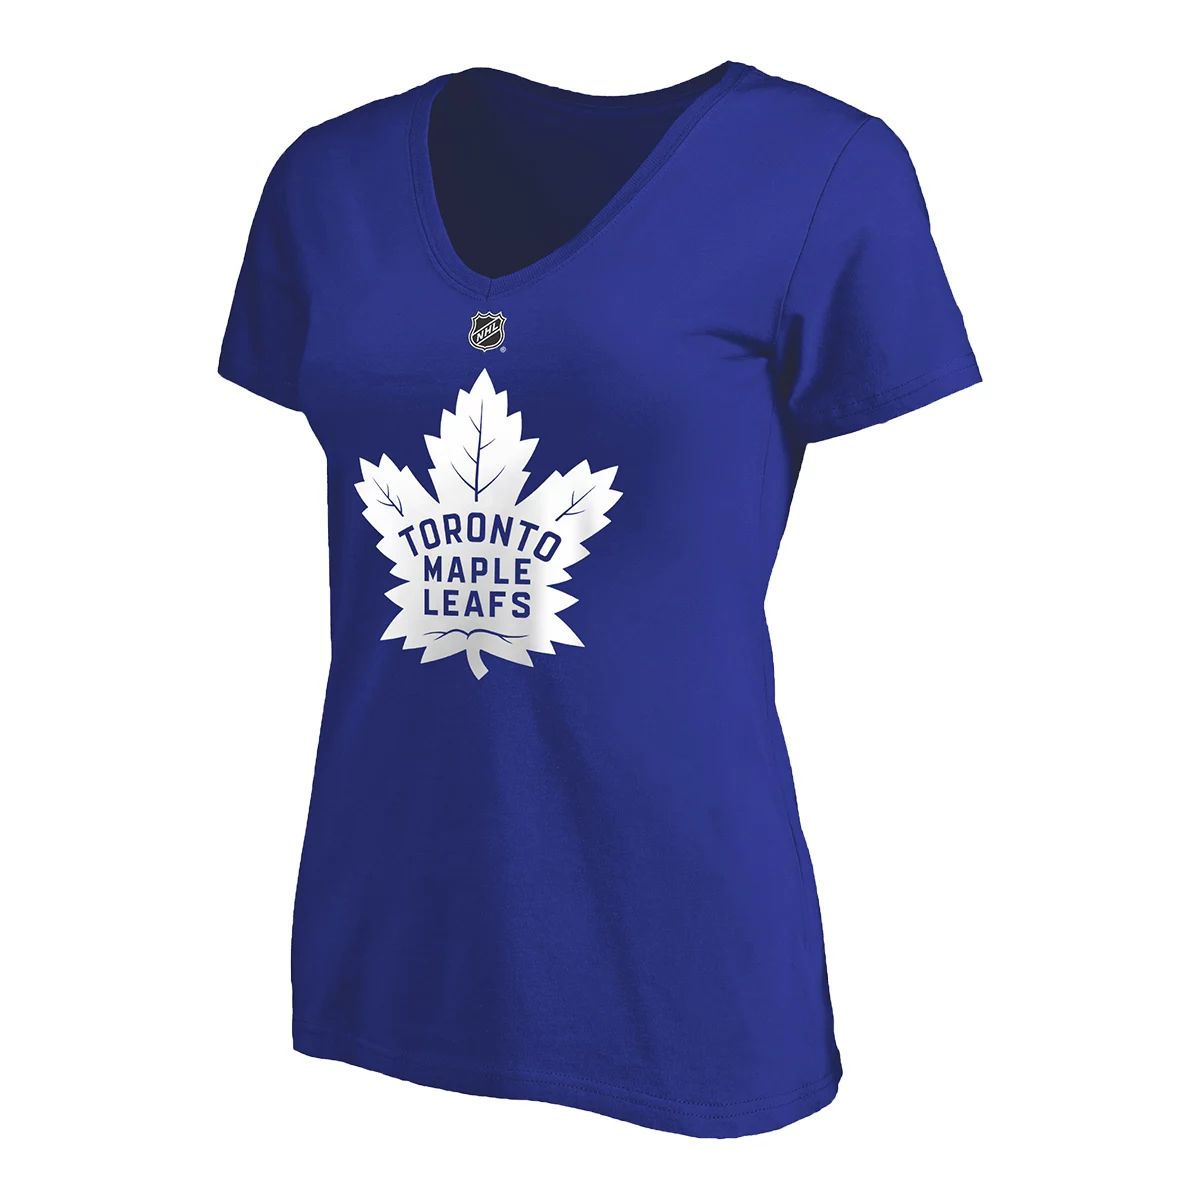 Fanatics Branded Blue Toronto Maple Leafs Authentic Pro Locker Room Rinkside Full-Zip Jacket